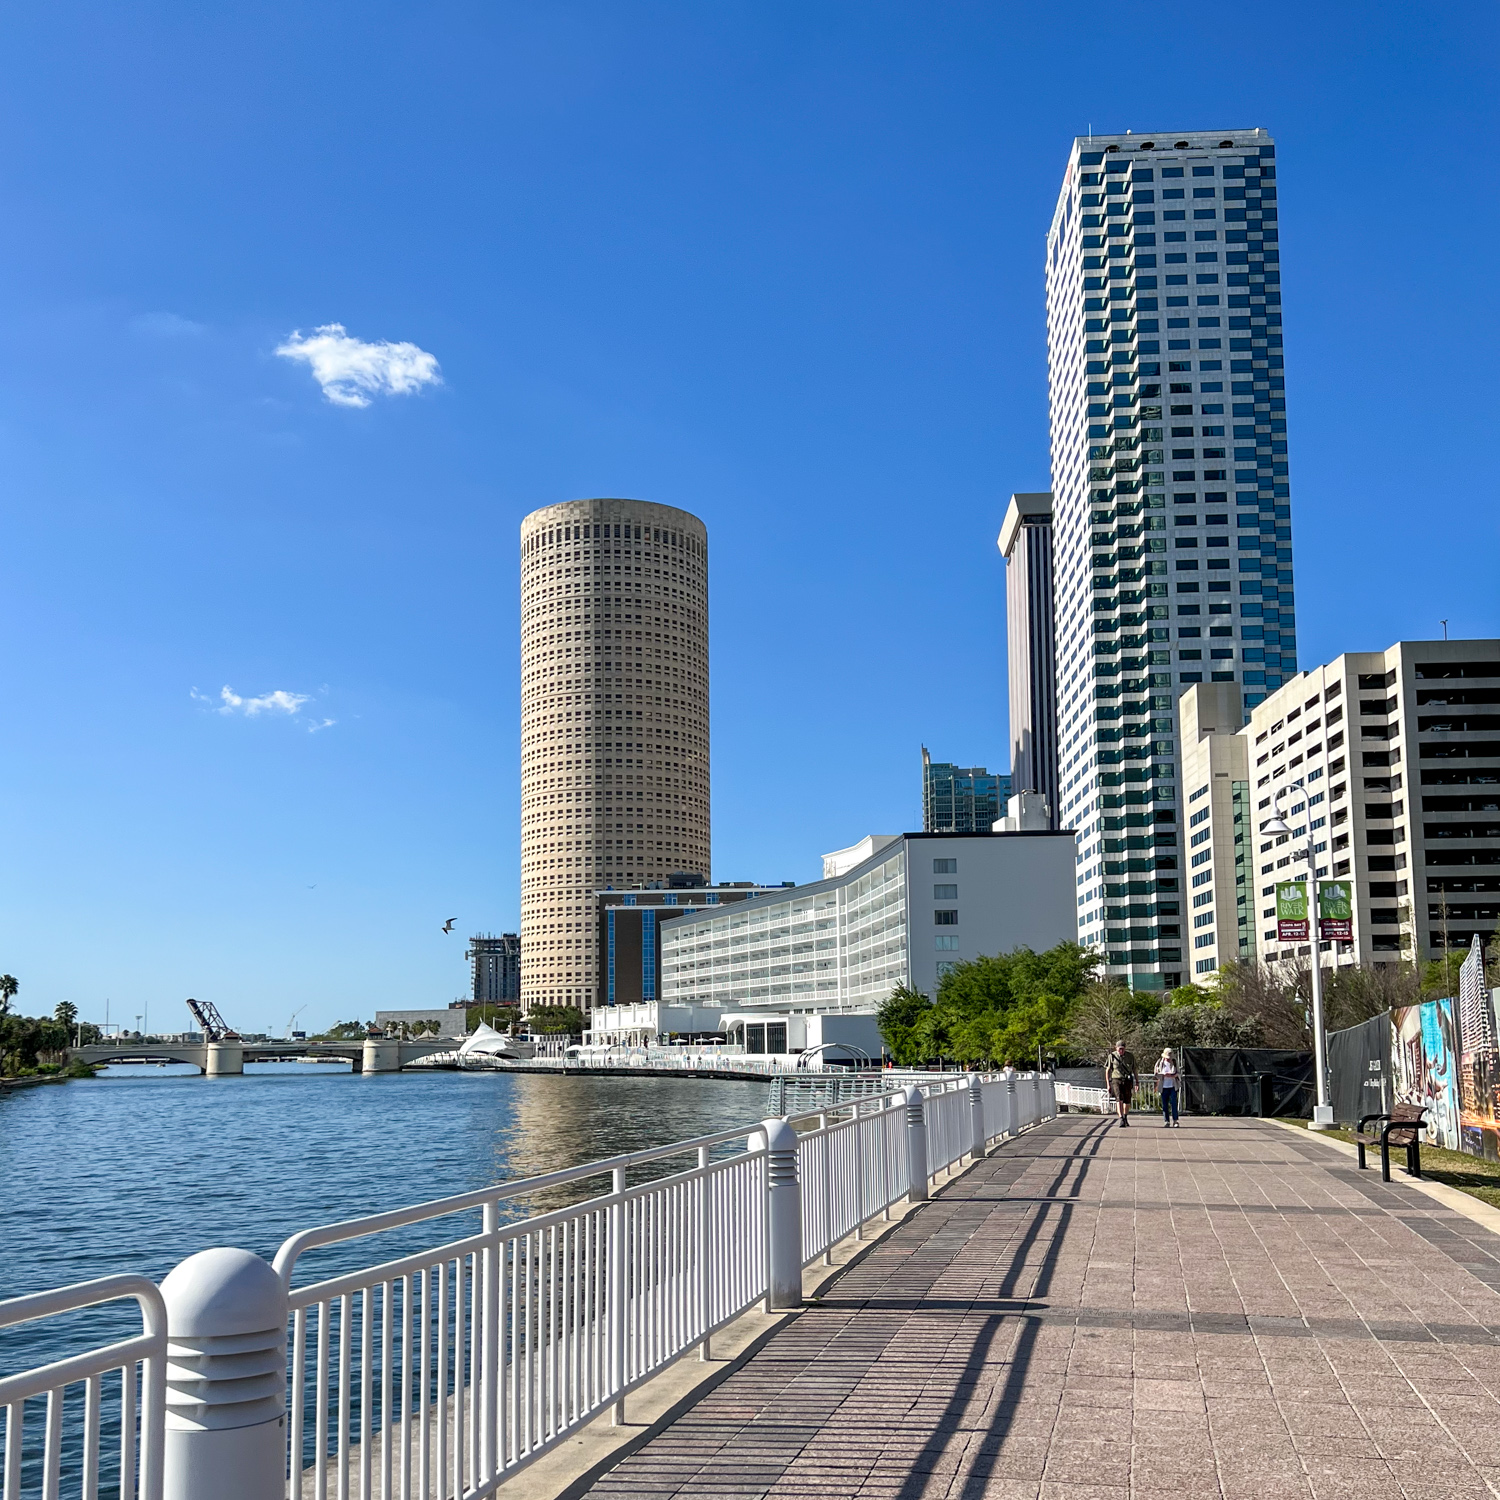 Walking, jogging, or biking the Riverwalk is one of the most popular outdoor activities in Tampa